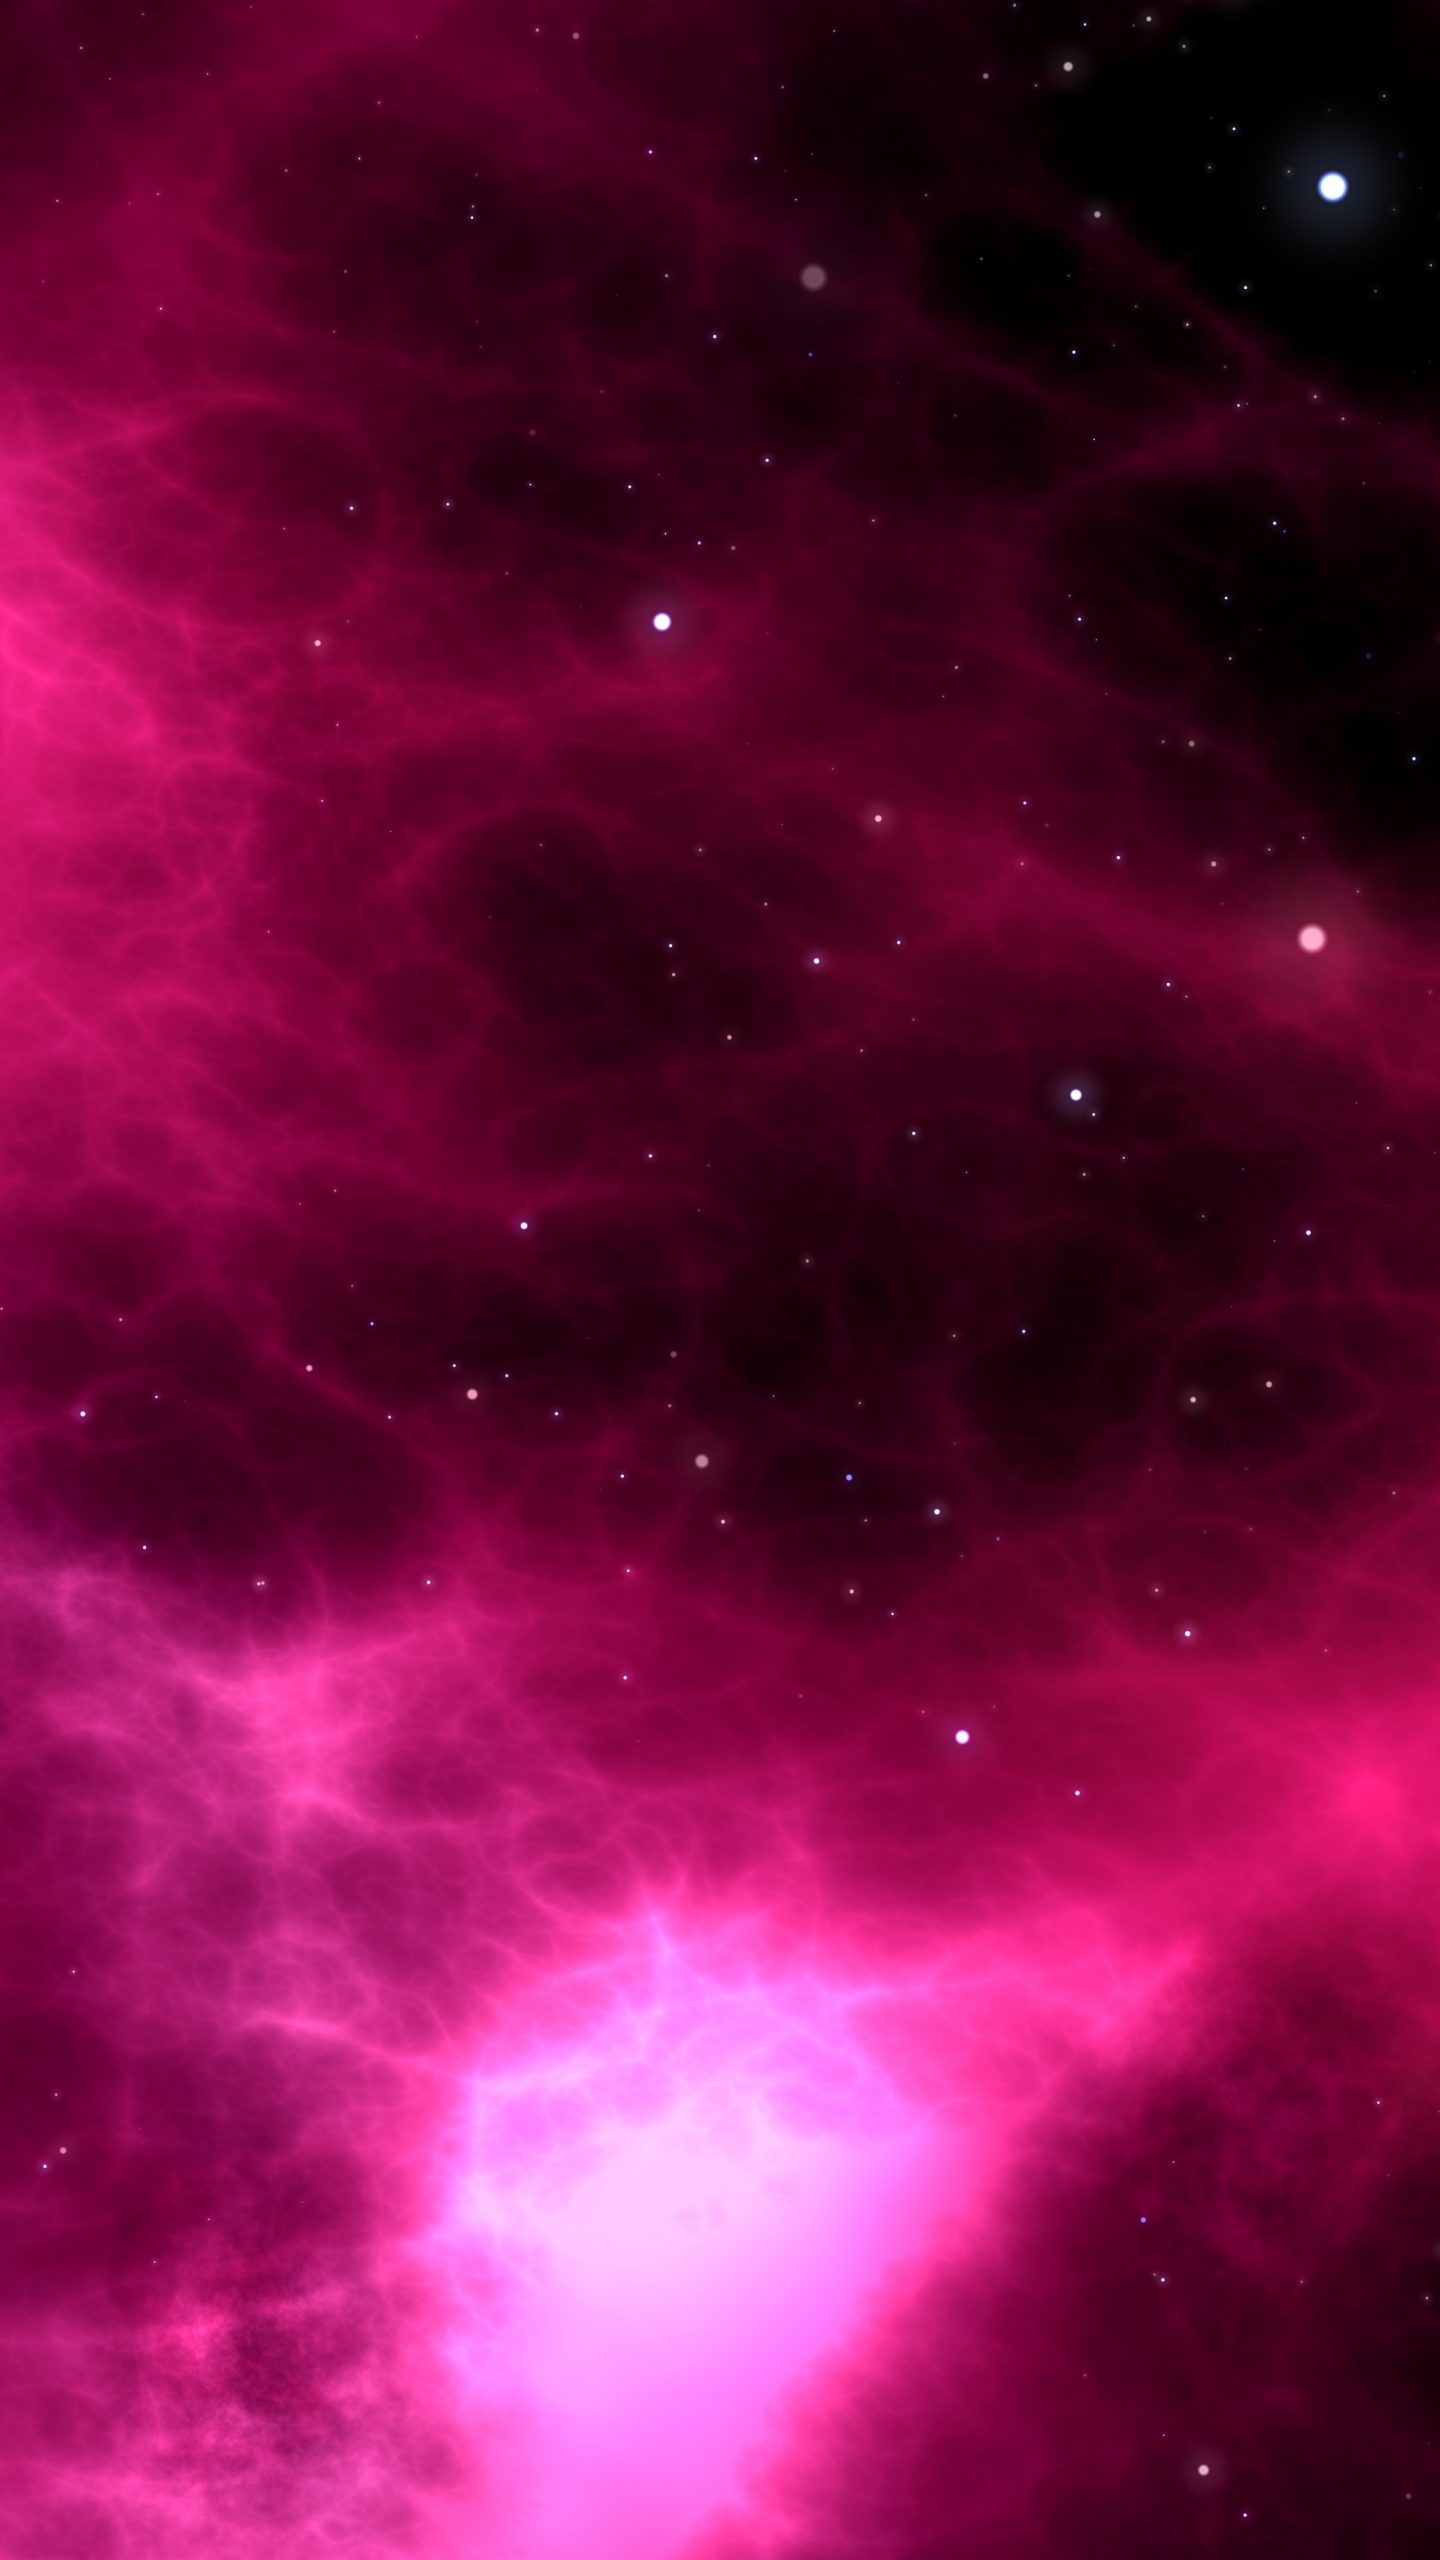 Pink Galaxy 4K UHD Wallpaper